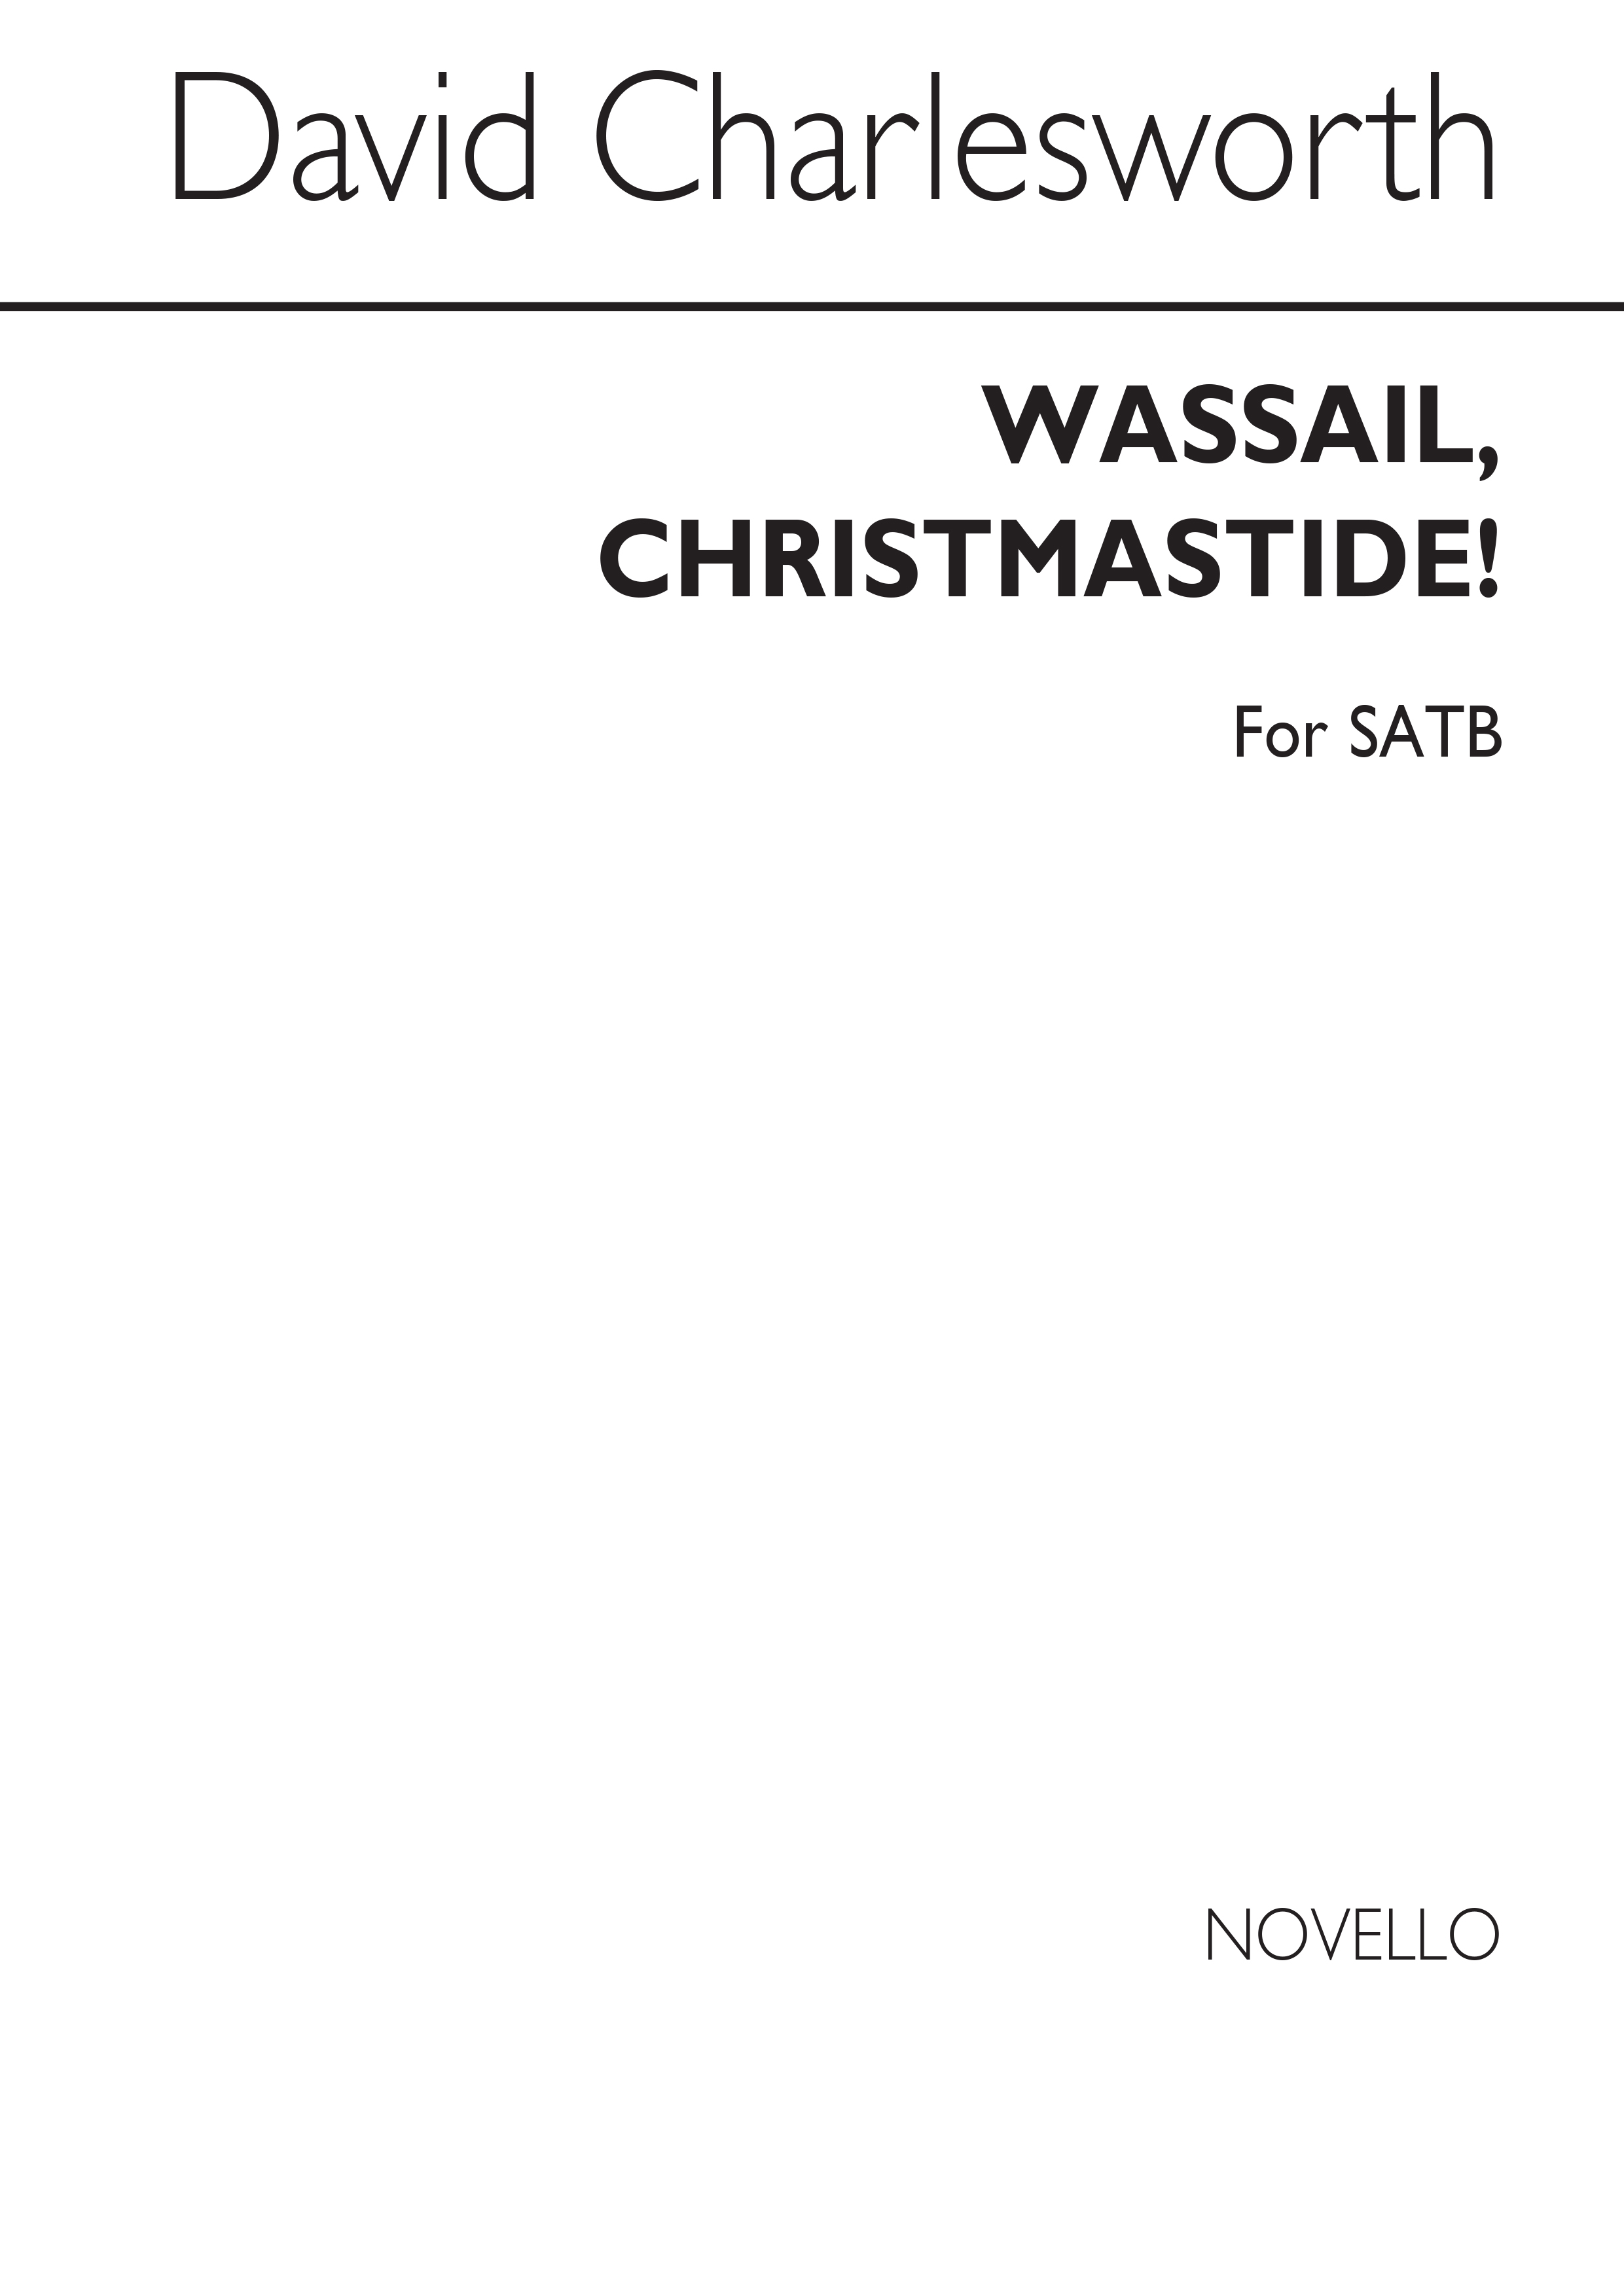 David Charlesworth: Wassail, Christmastide!